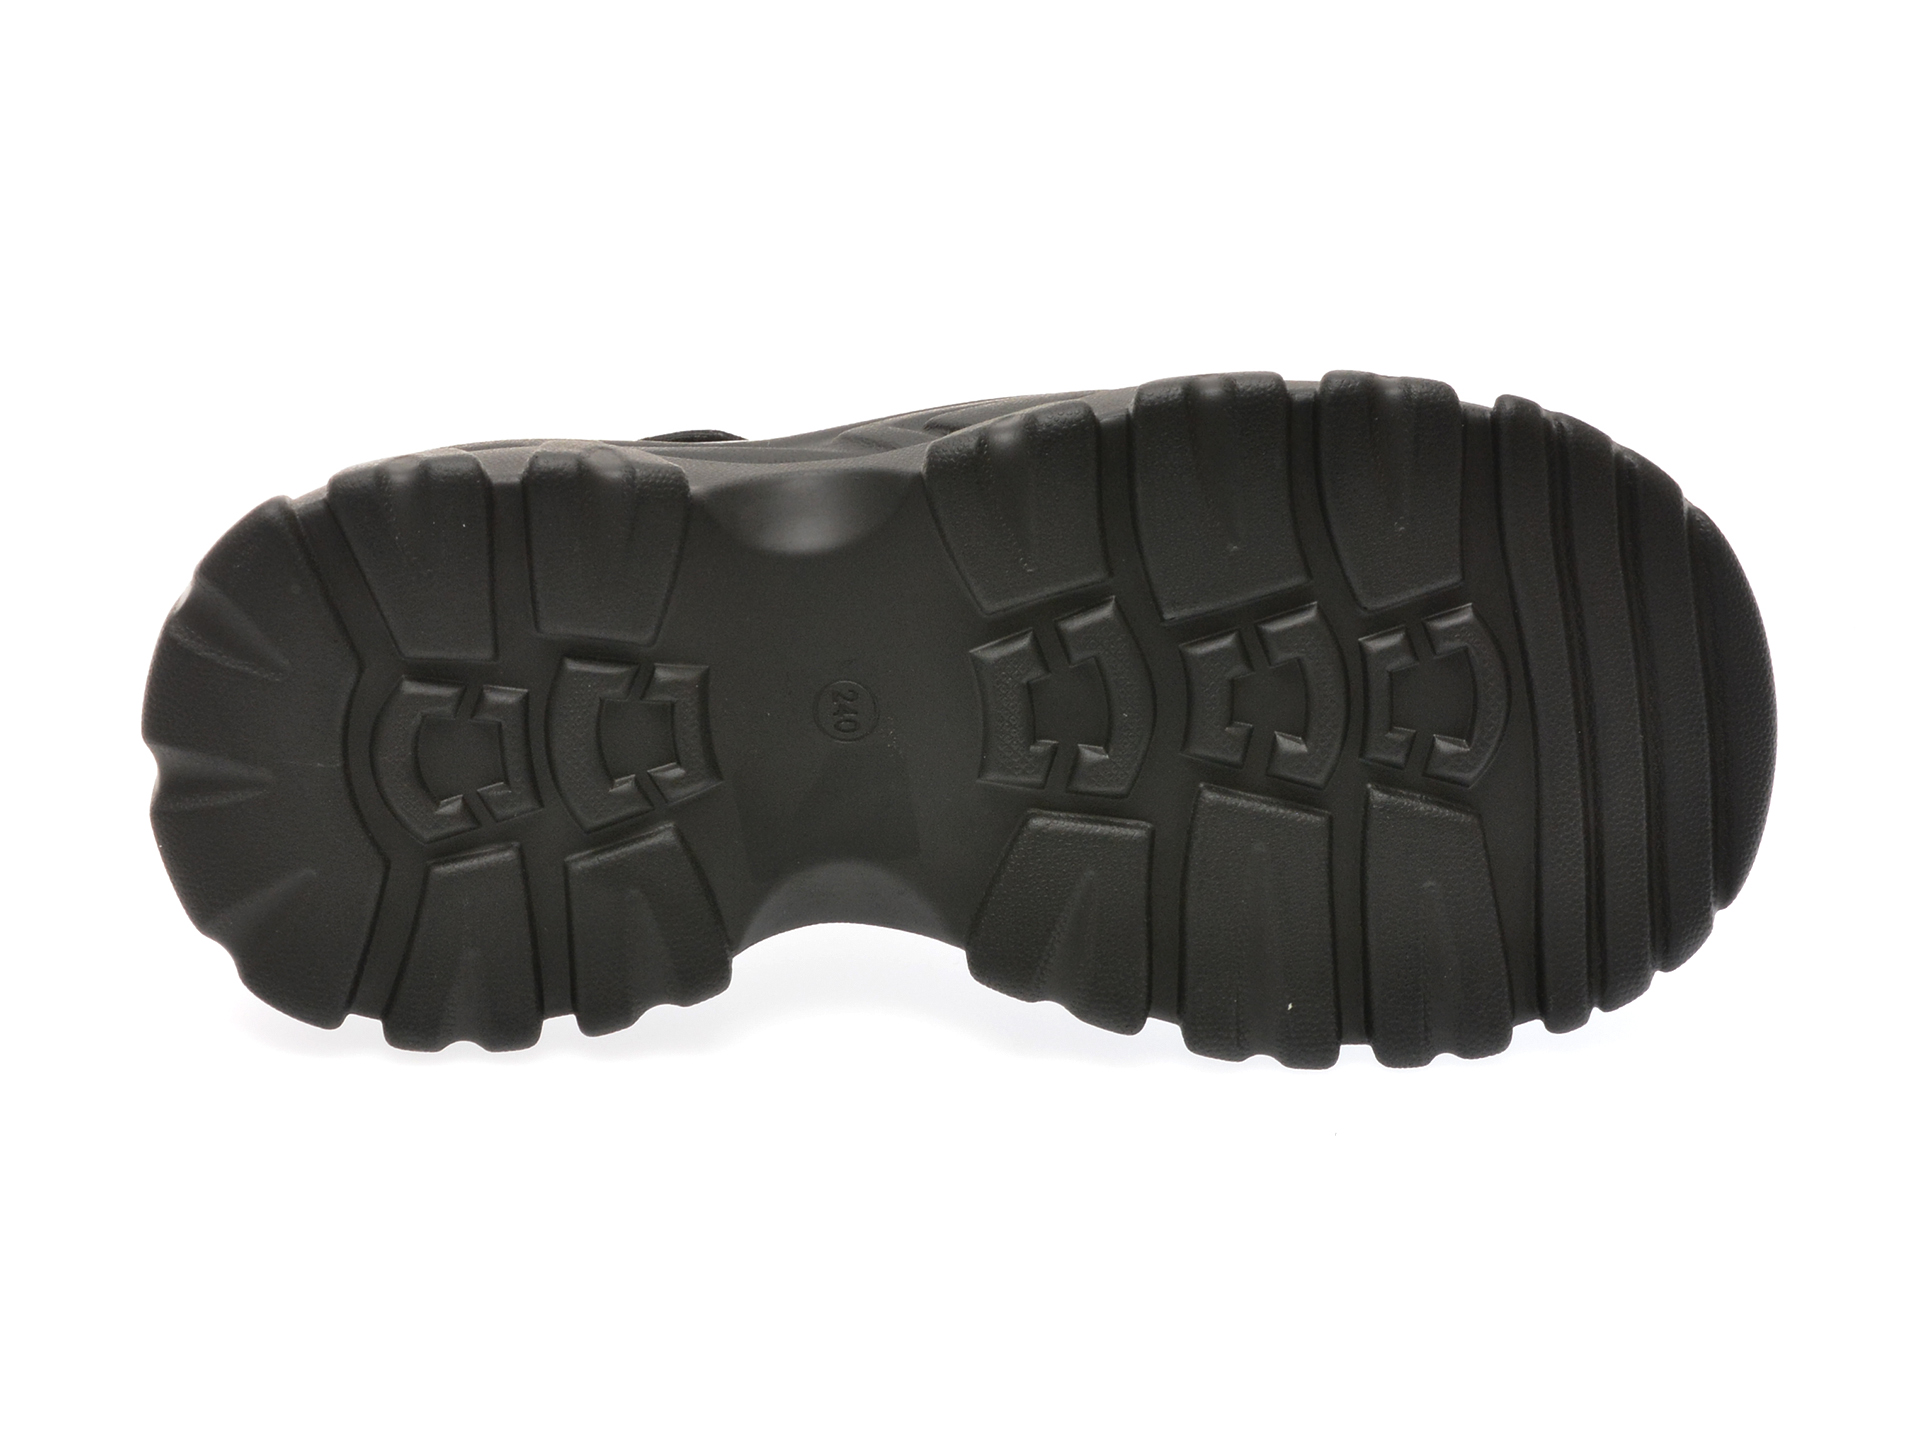 Pantofi casual GRYXX negri, 3682, din piele ecologica